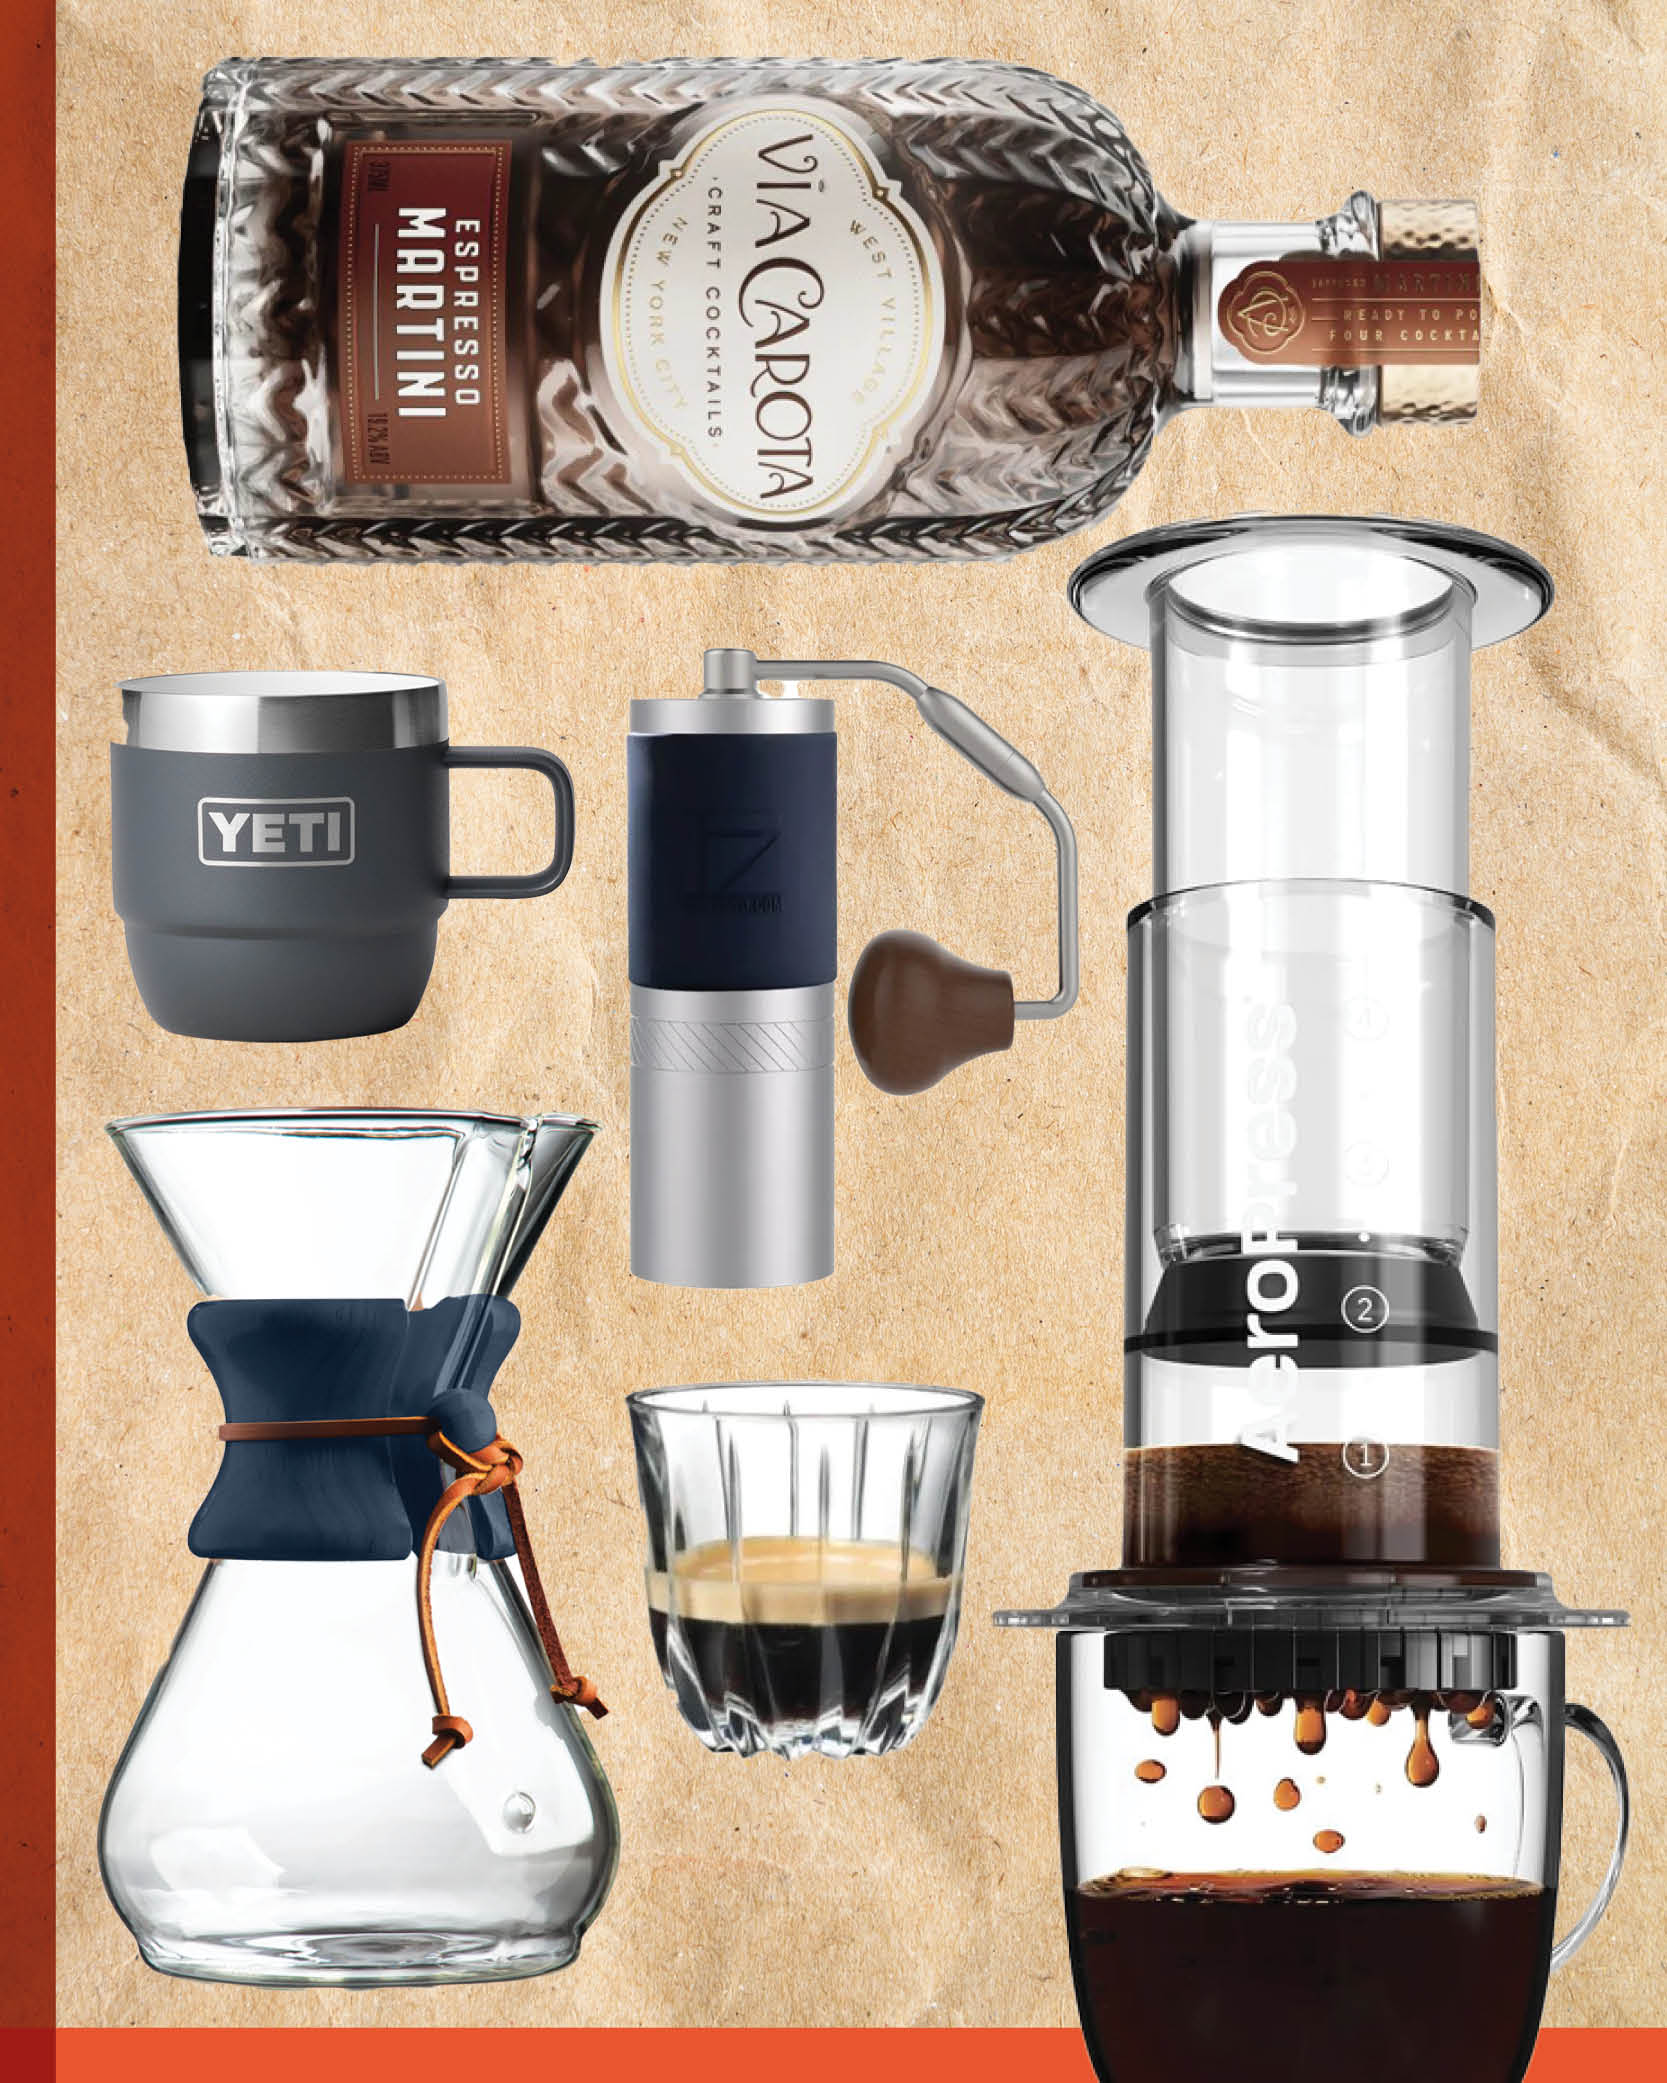 Neonblond Worlds Best Chamberlain Mug gift for Coffee Tea lovers